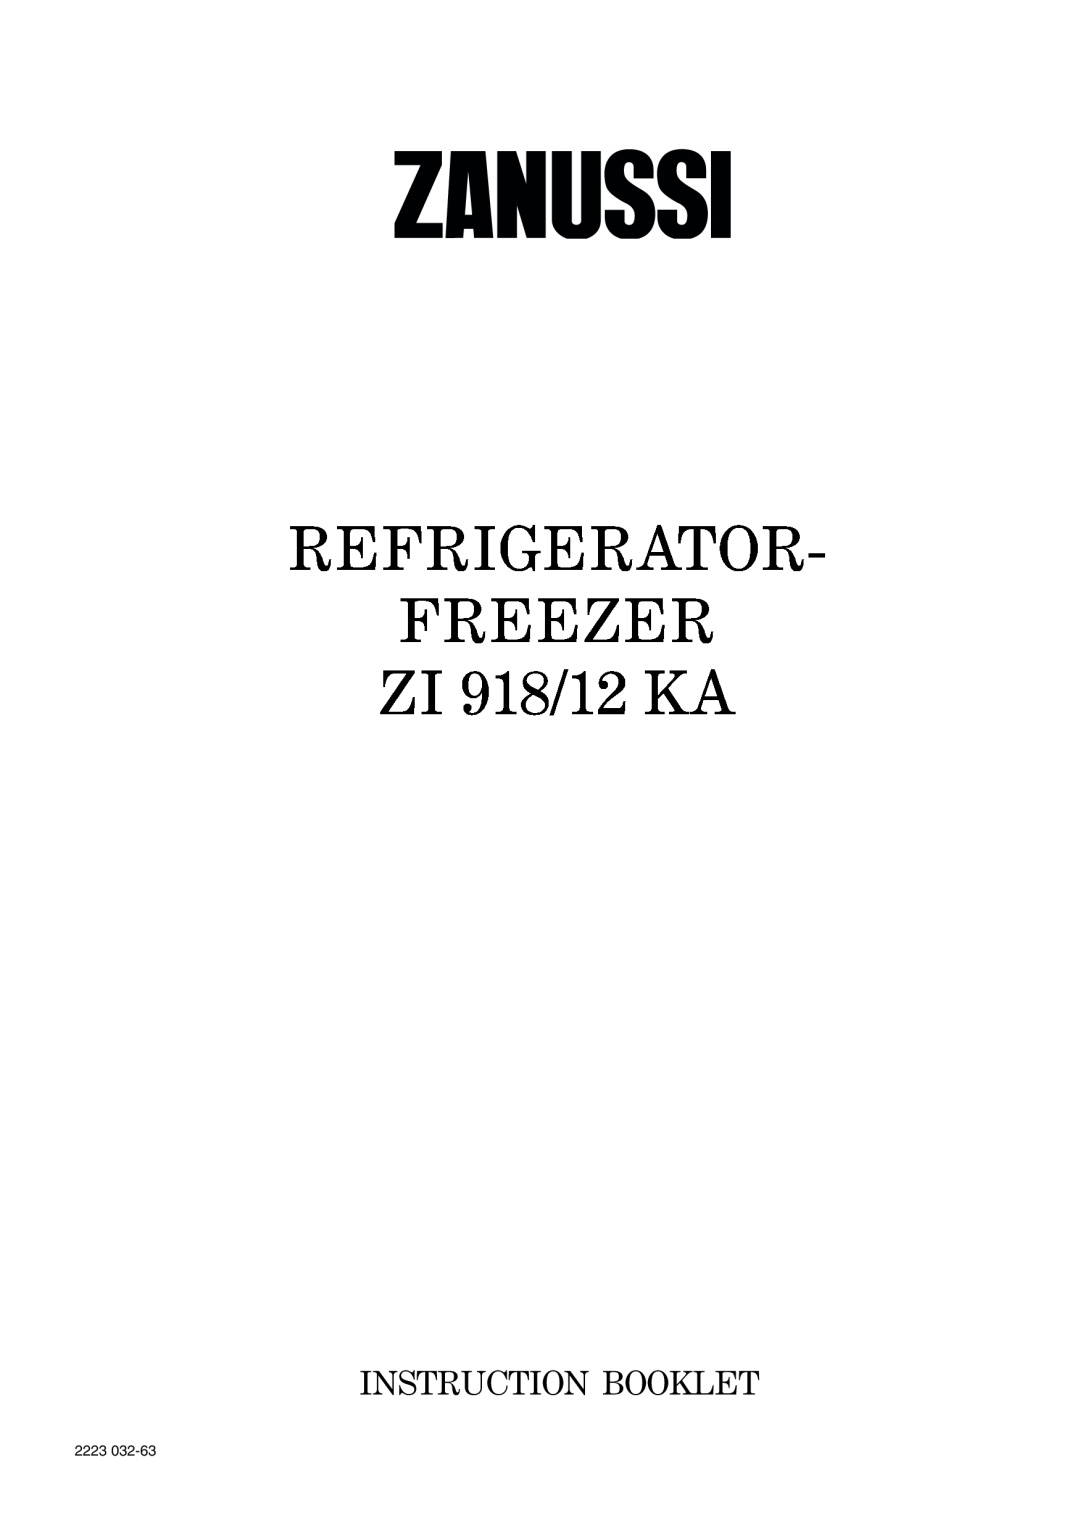 Zanussi manual REFRIGERATOR FREEZER ZI 918/12 KA, Instruction Booklet, 2223 